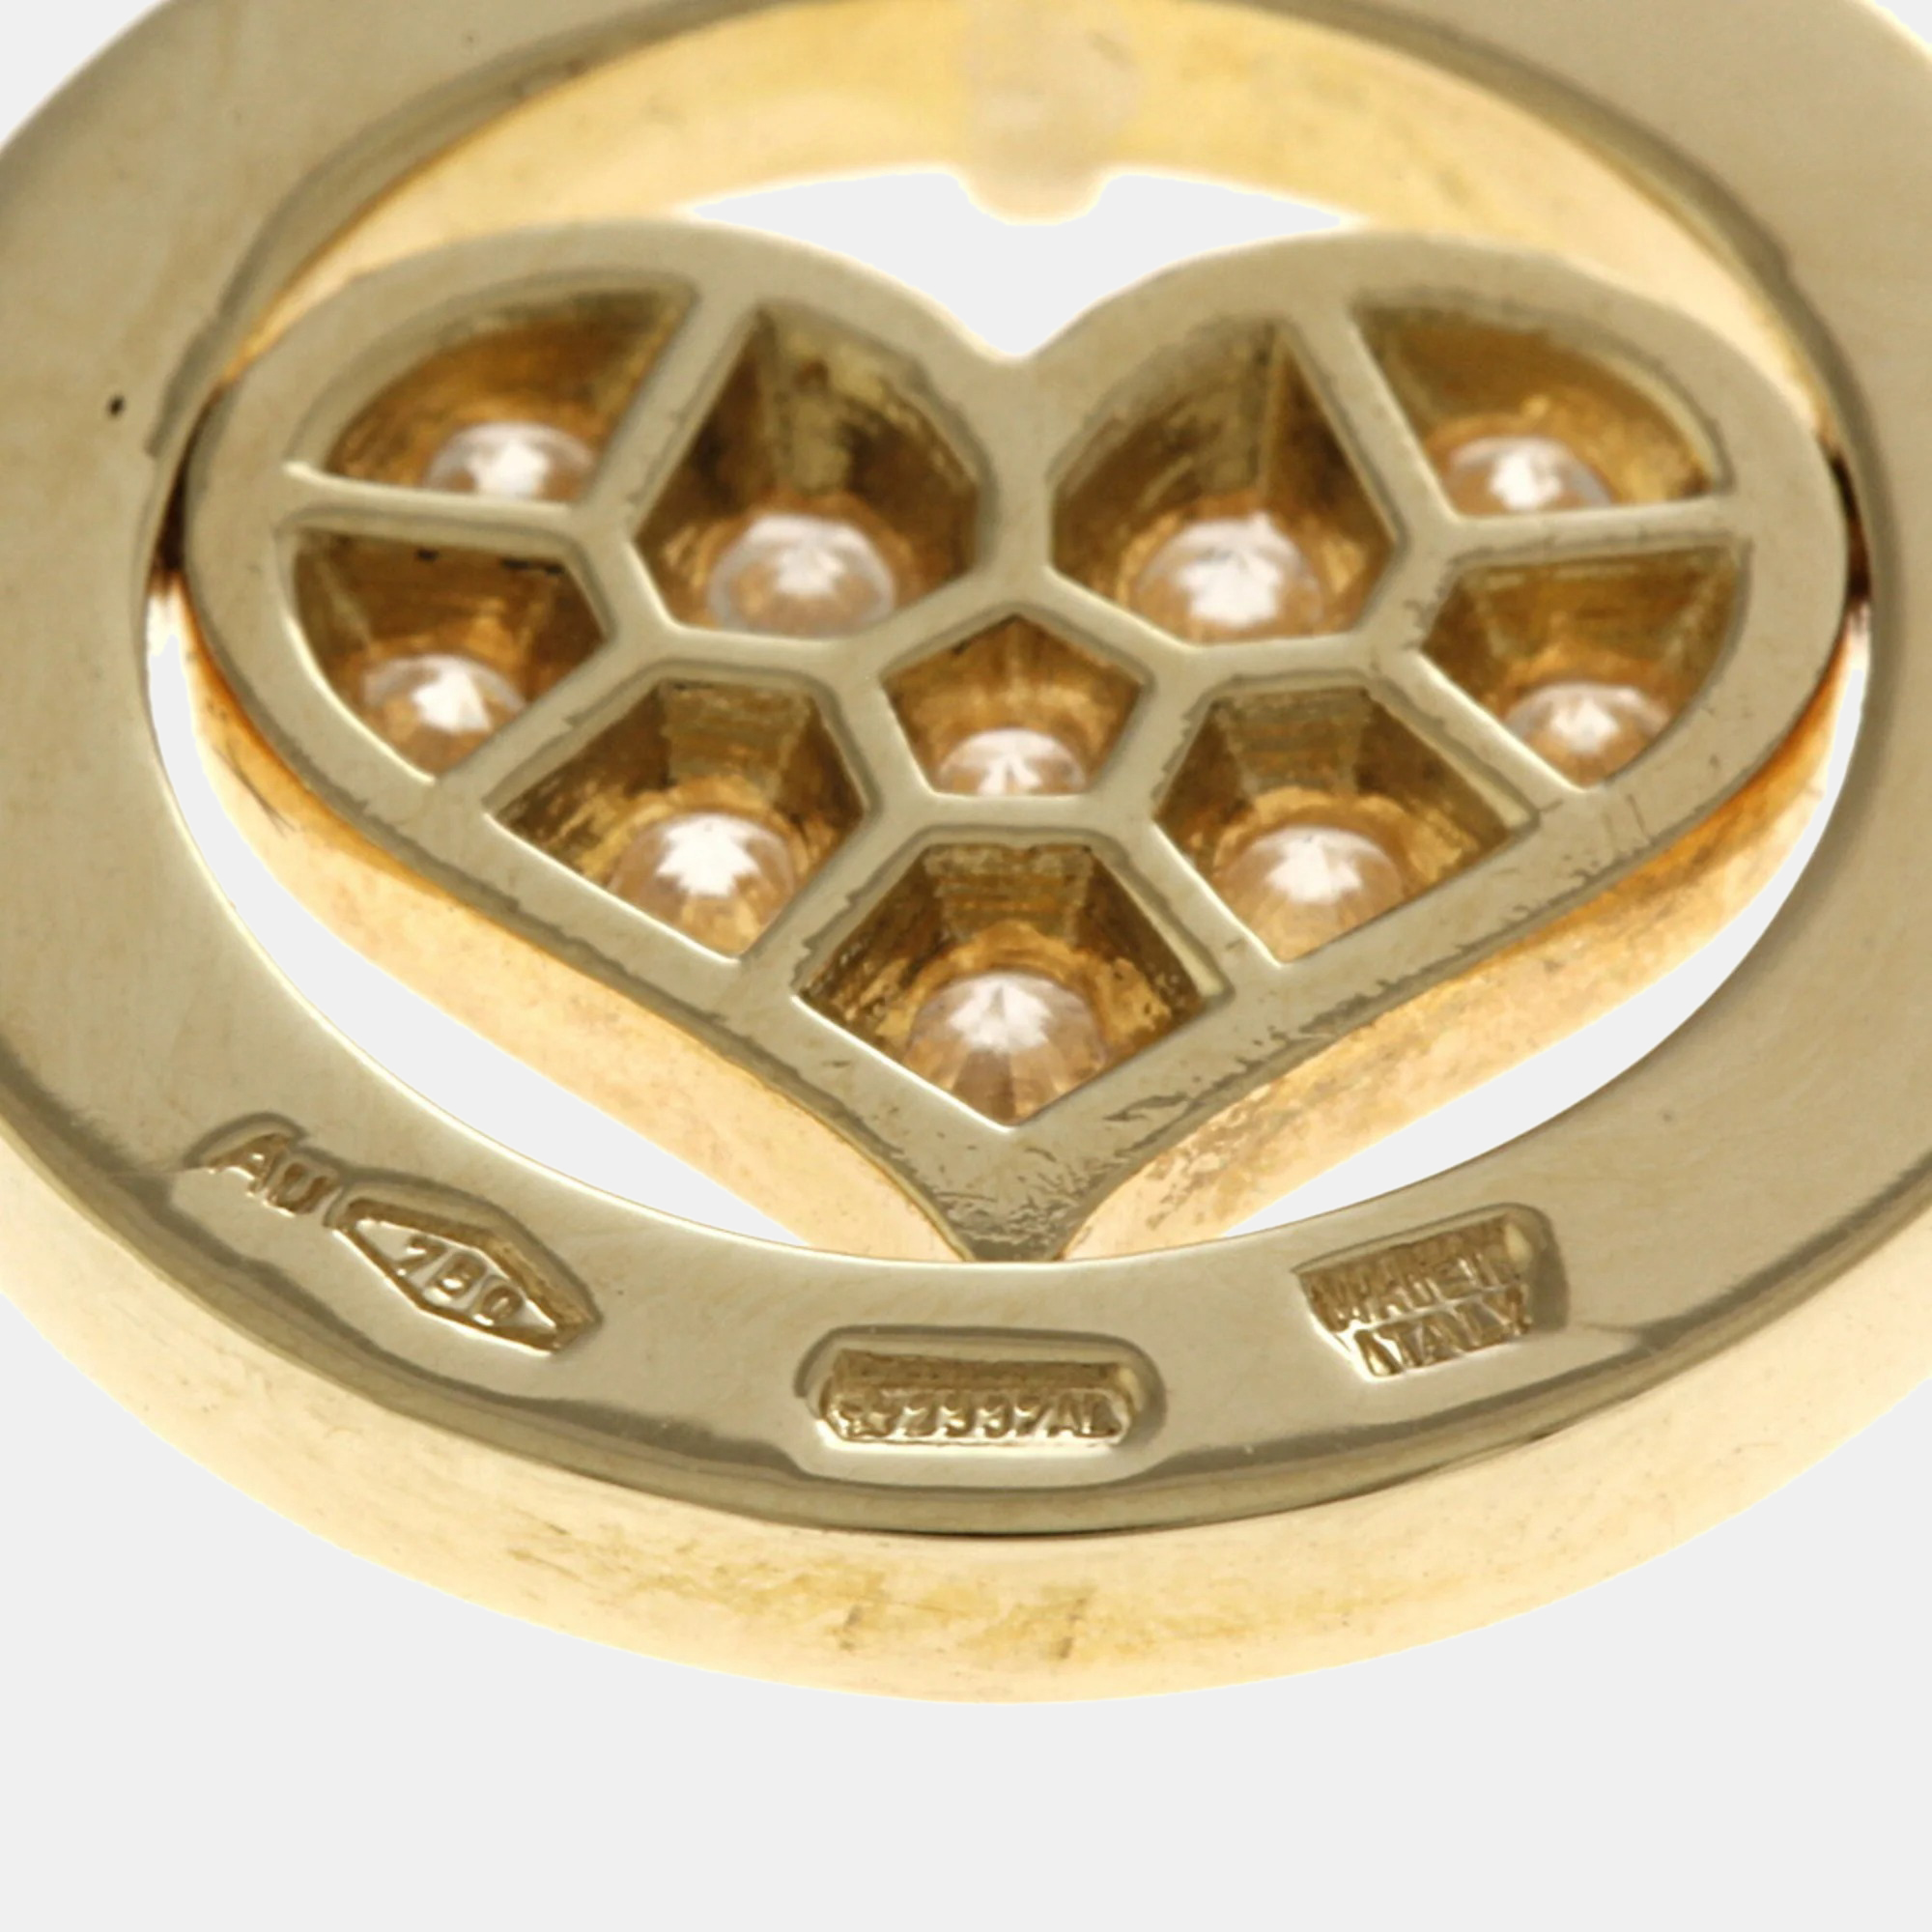 Bvlgari 18K Yellow Gold And Diamond Tondo Heart Pendant Necklace